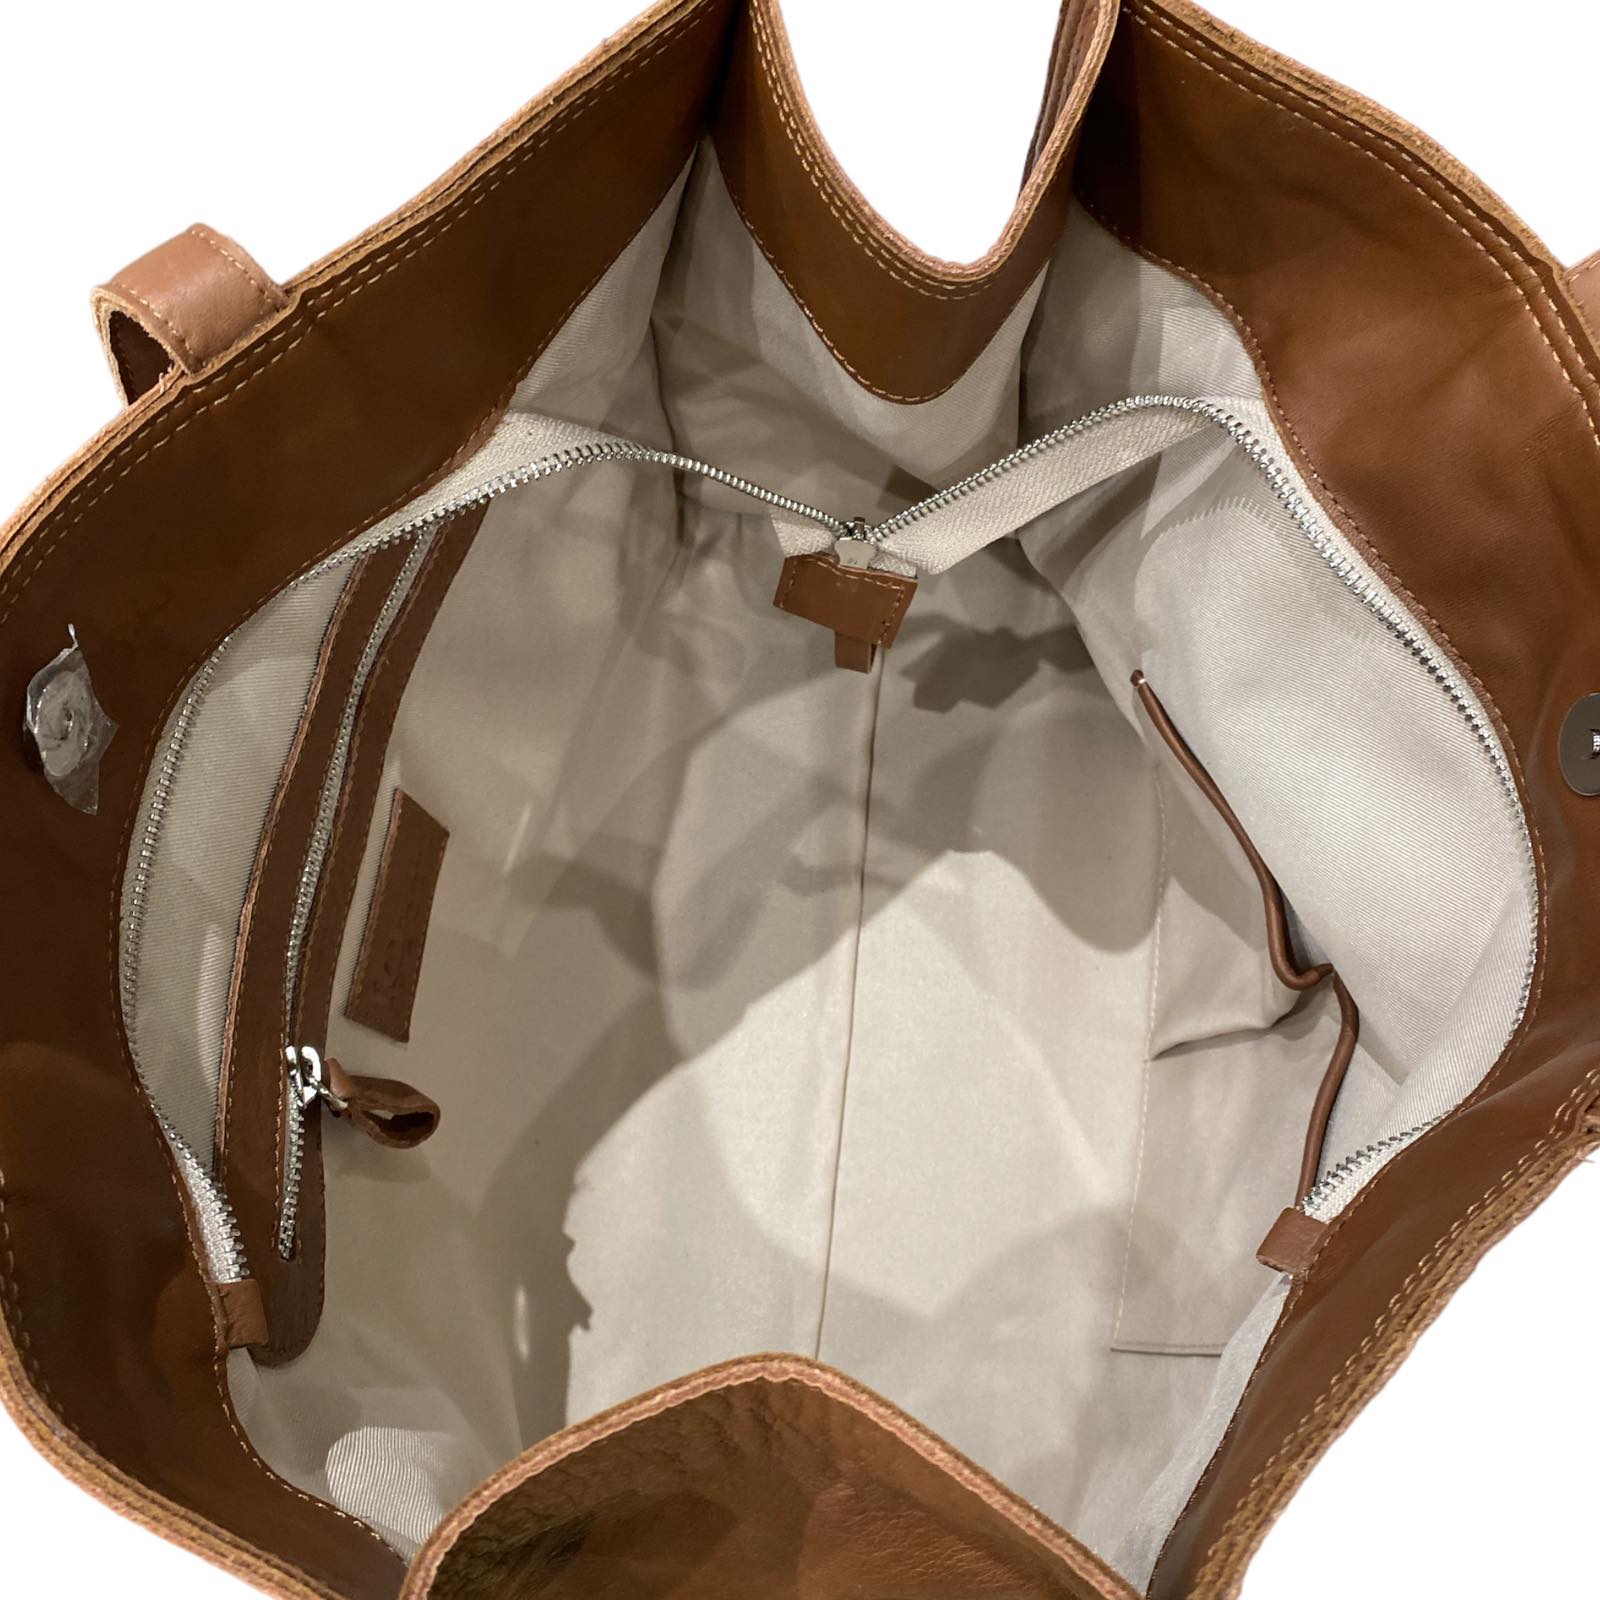 Taba leather shoulder bag with hands